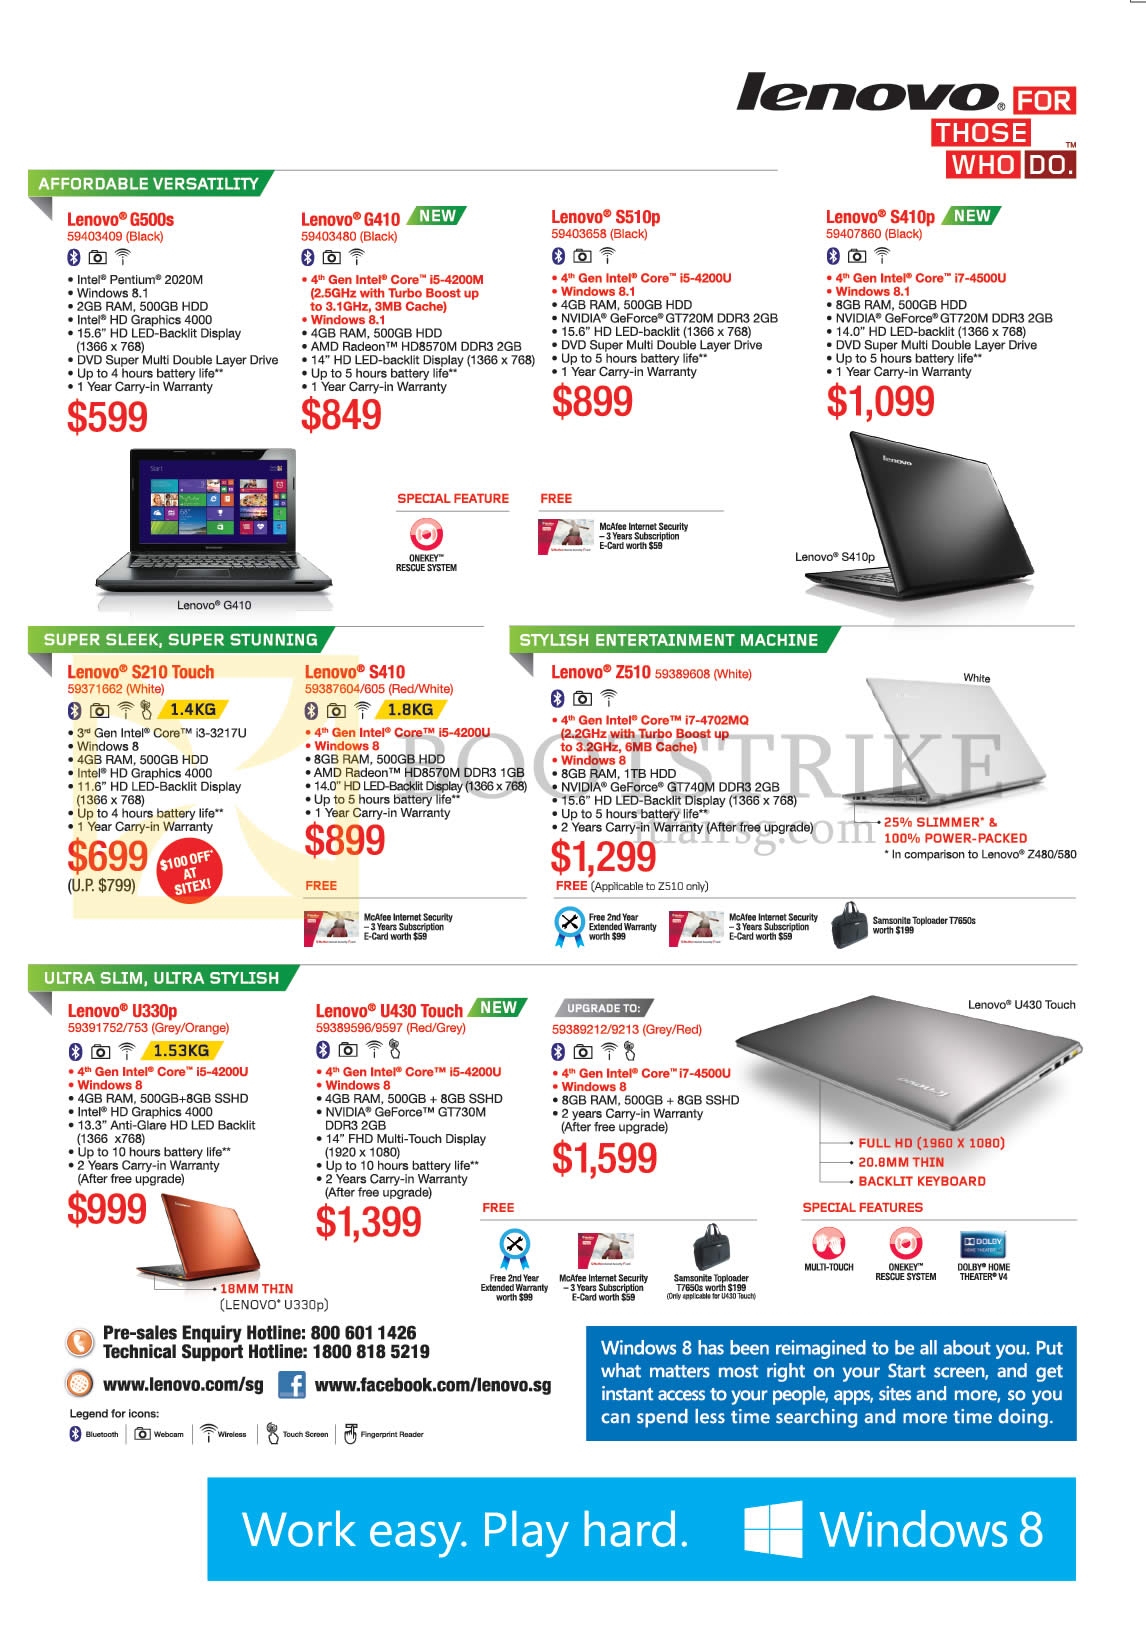 SITEX 2013 price list image brochure of Lenovo Notebooks G500s, G410, S510p, S410p, Z510, S410, S210, U430, U330p